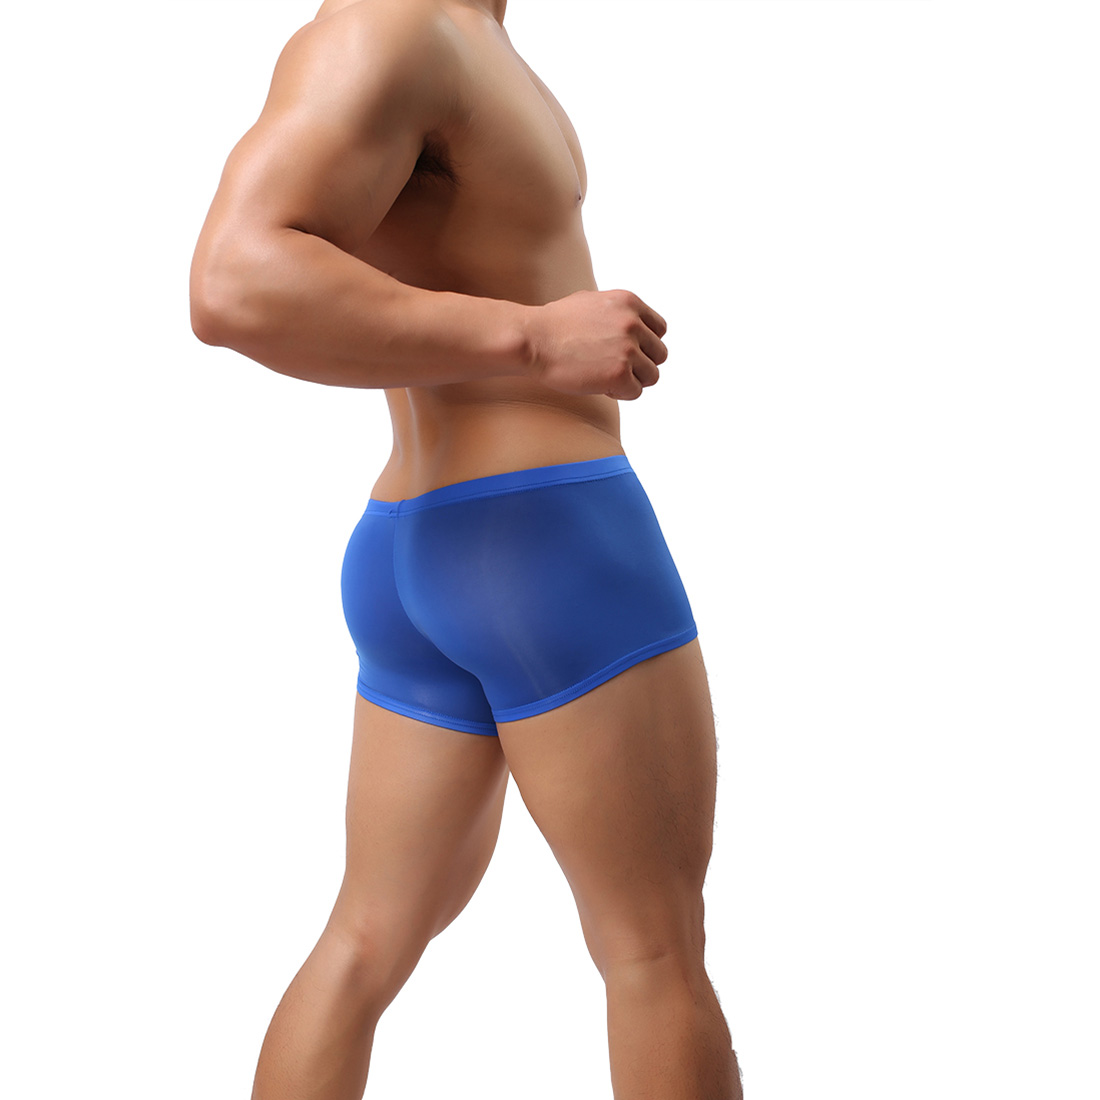 Men's Sexy Lingerie Underwear See-through Boxer Shorts Underpants WH42 Blue L